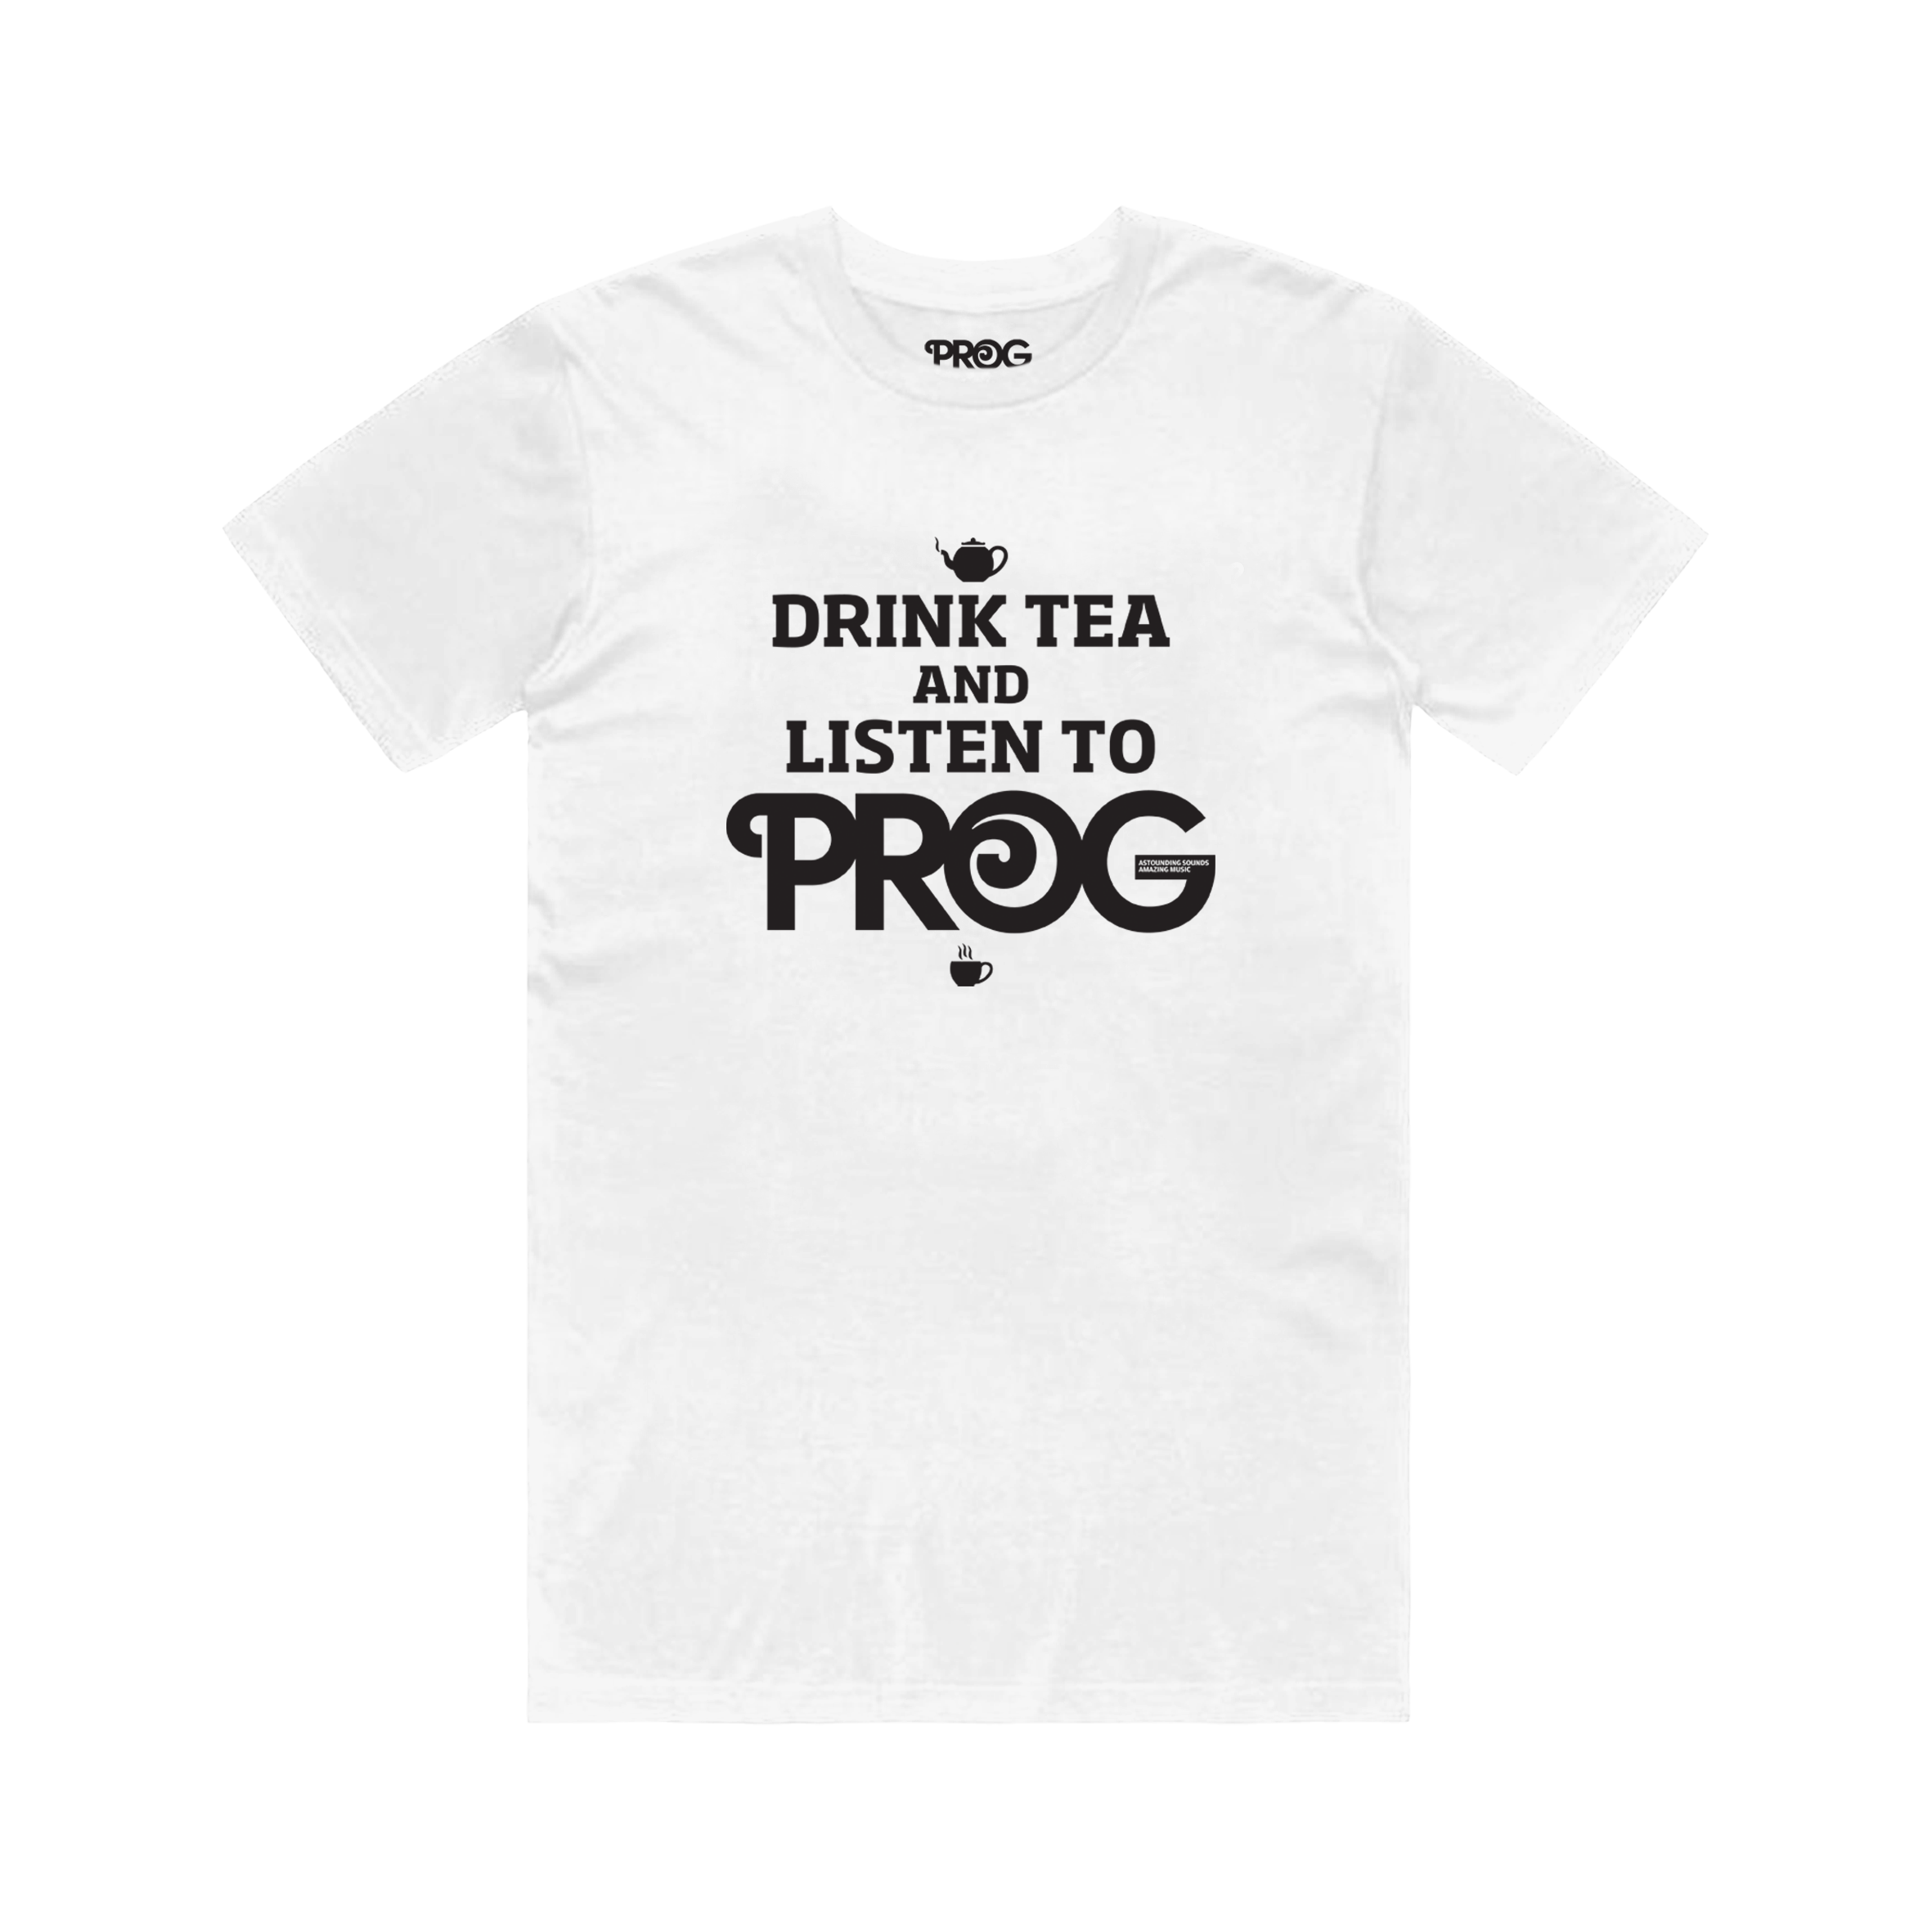 Prog - Drink Tea And Listen To Prog